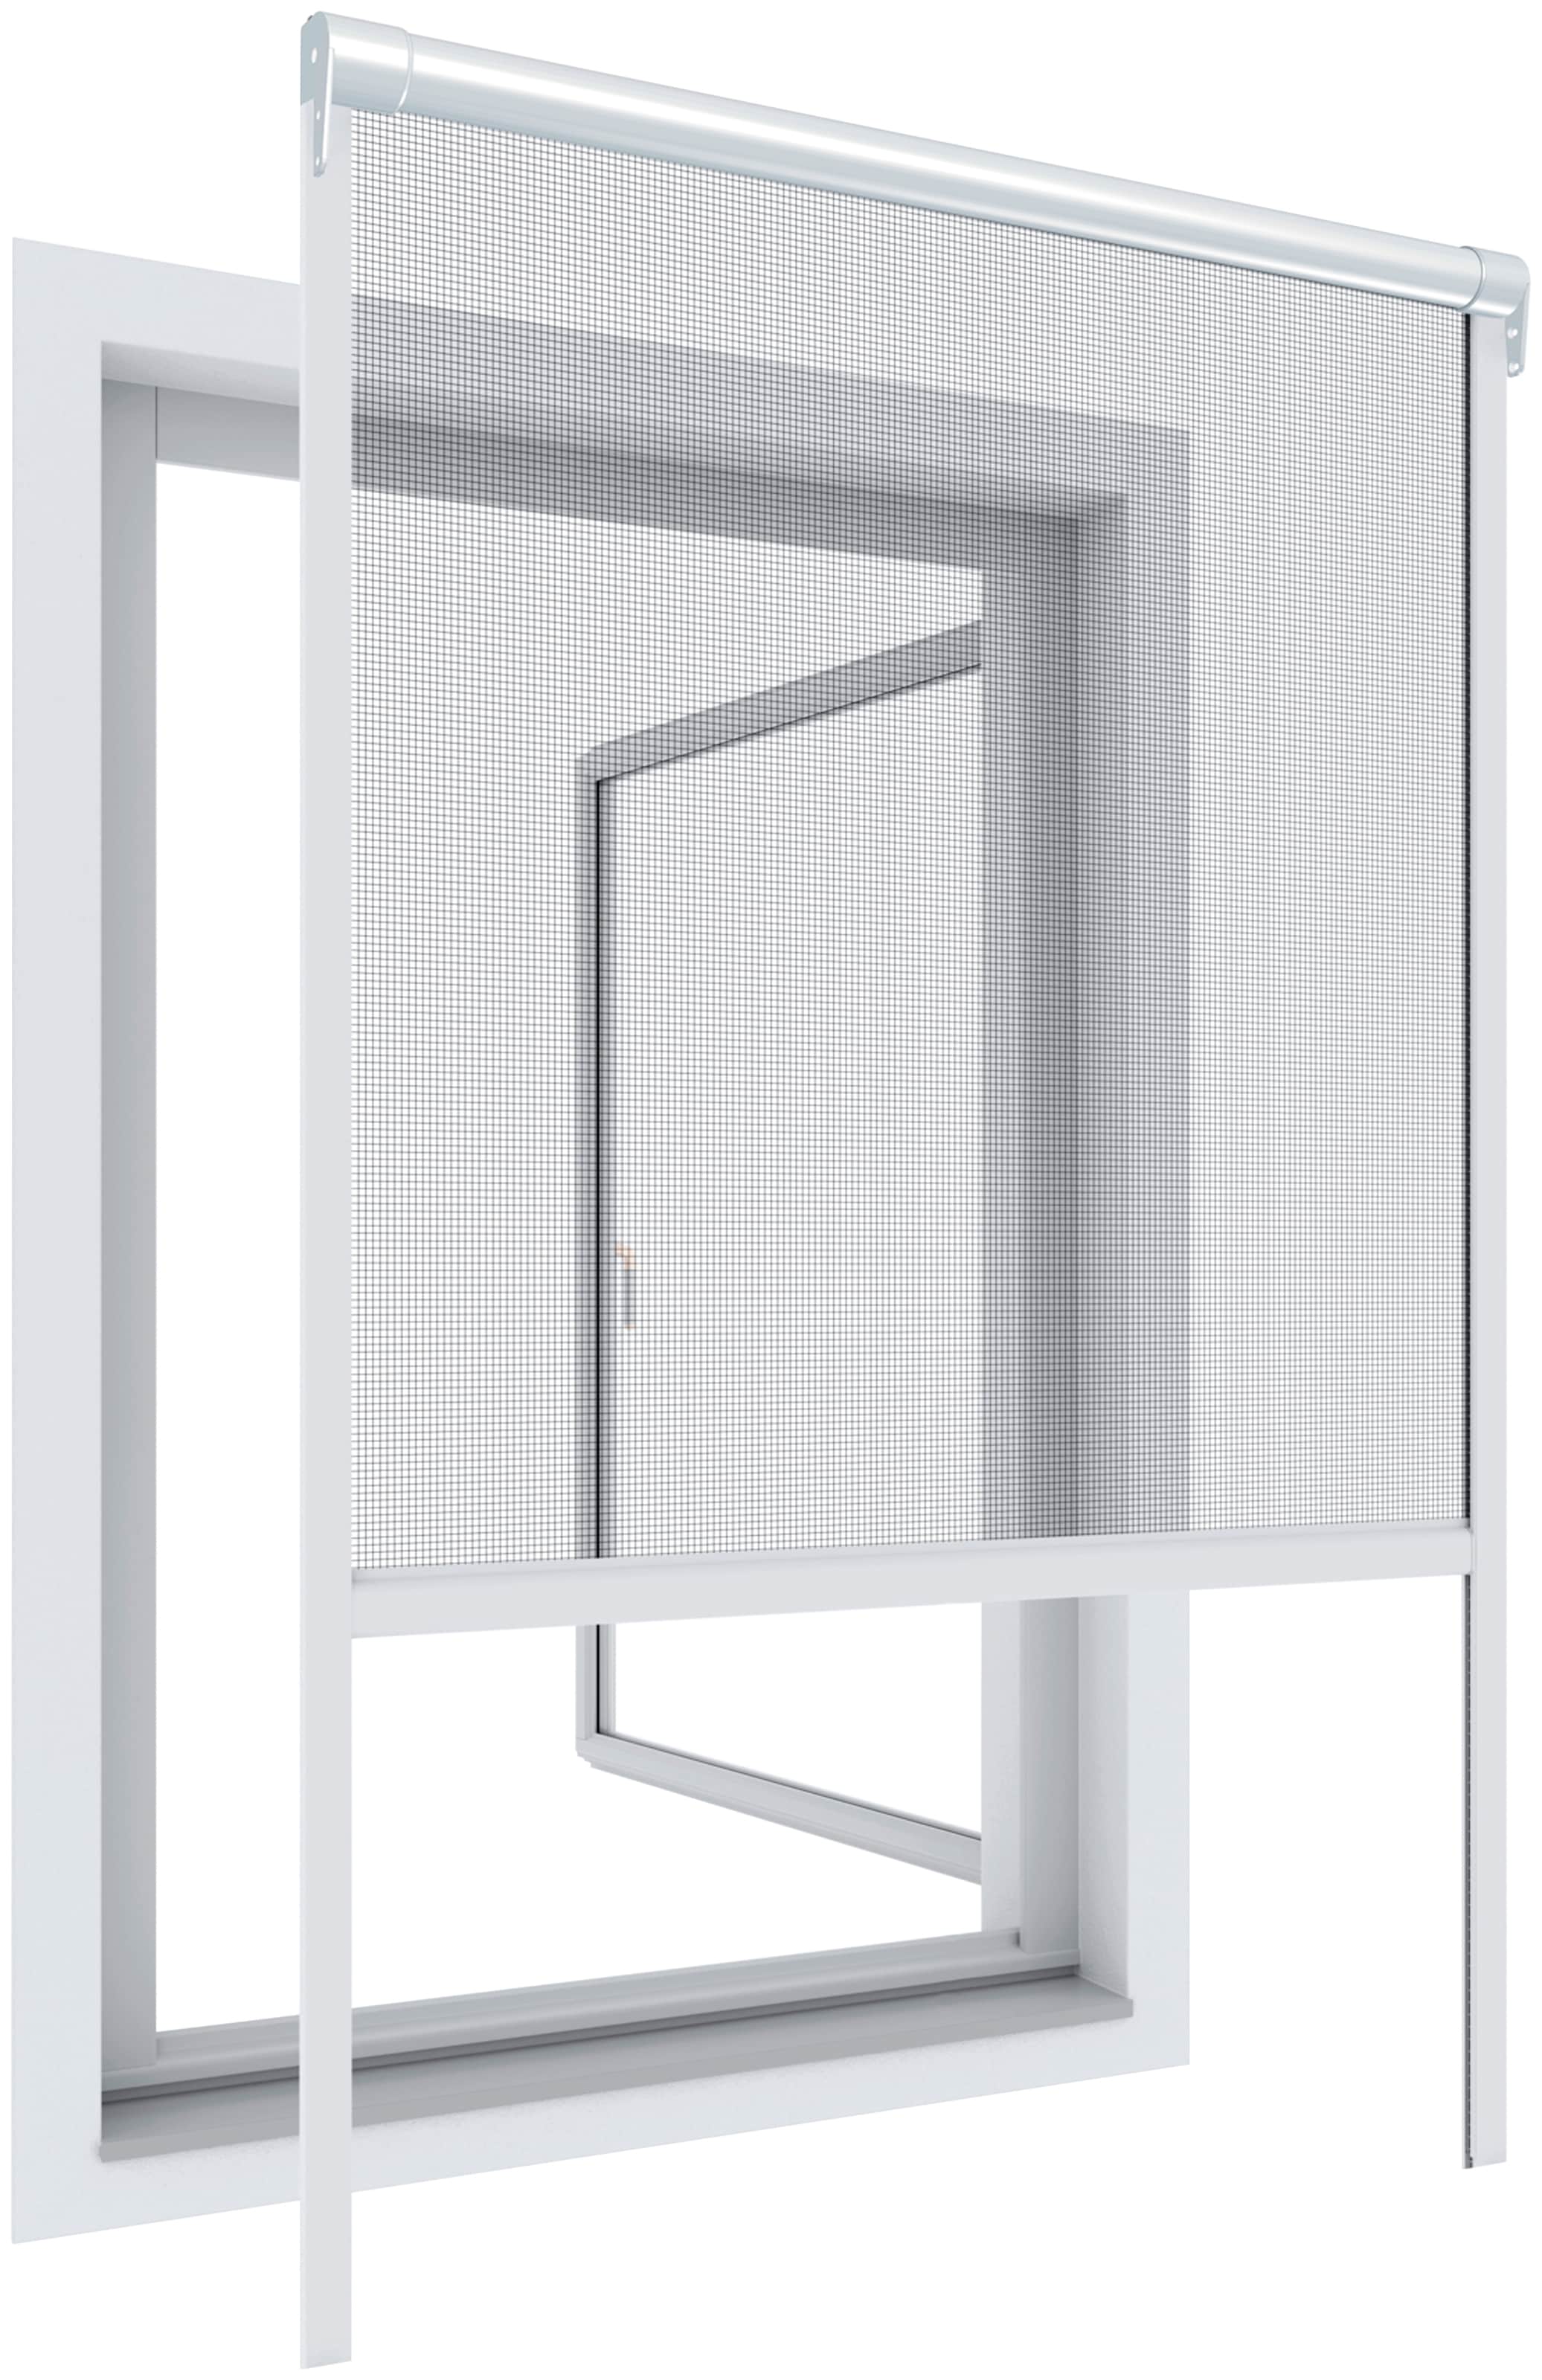 Windhager Insektenschutz-Fensterrahmen »Rollo Basic«, BxH: 160x160 cm, kürzbar, inkl. Befestigungsmaterial